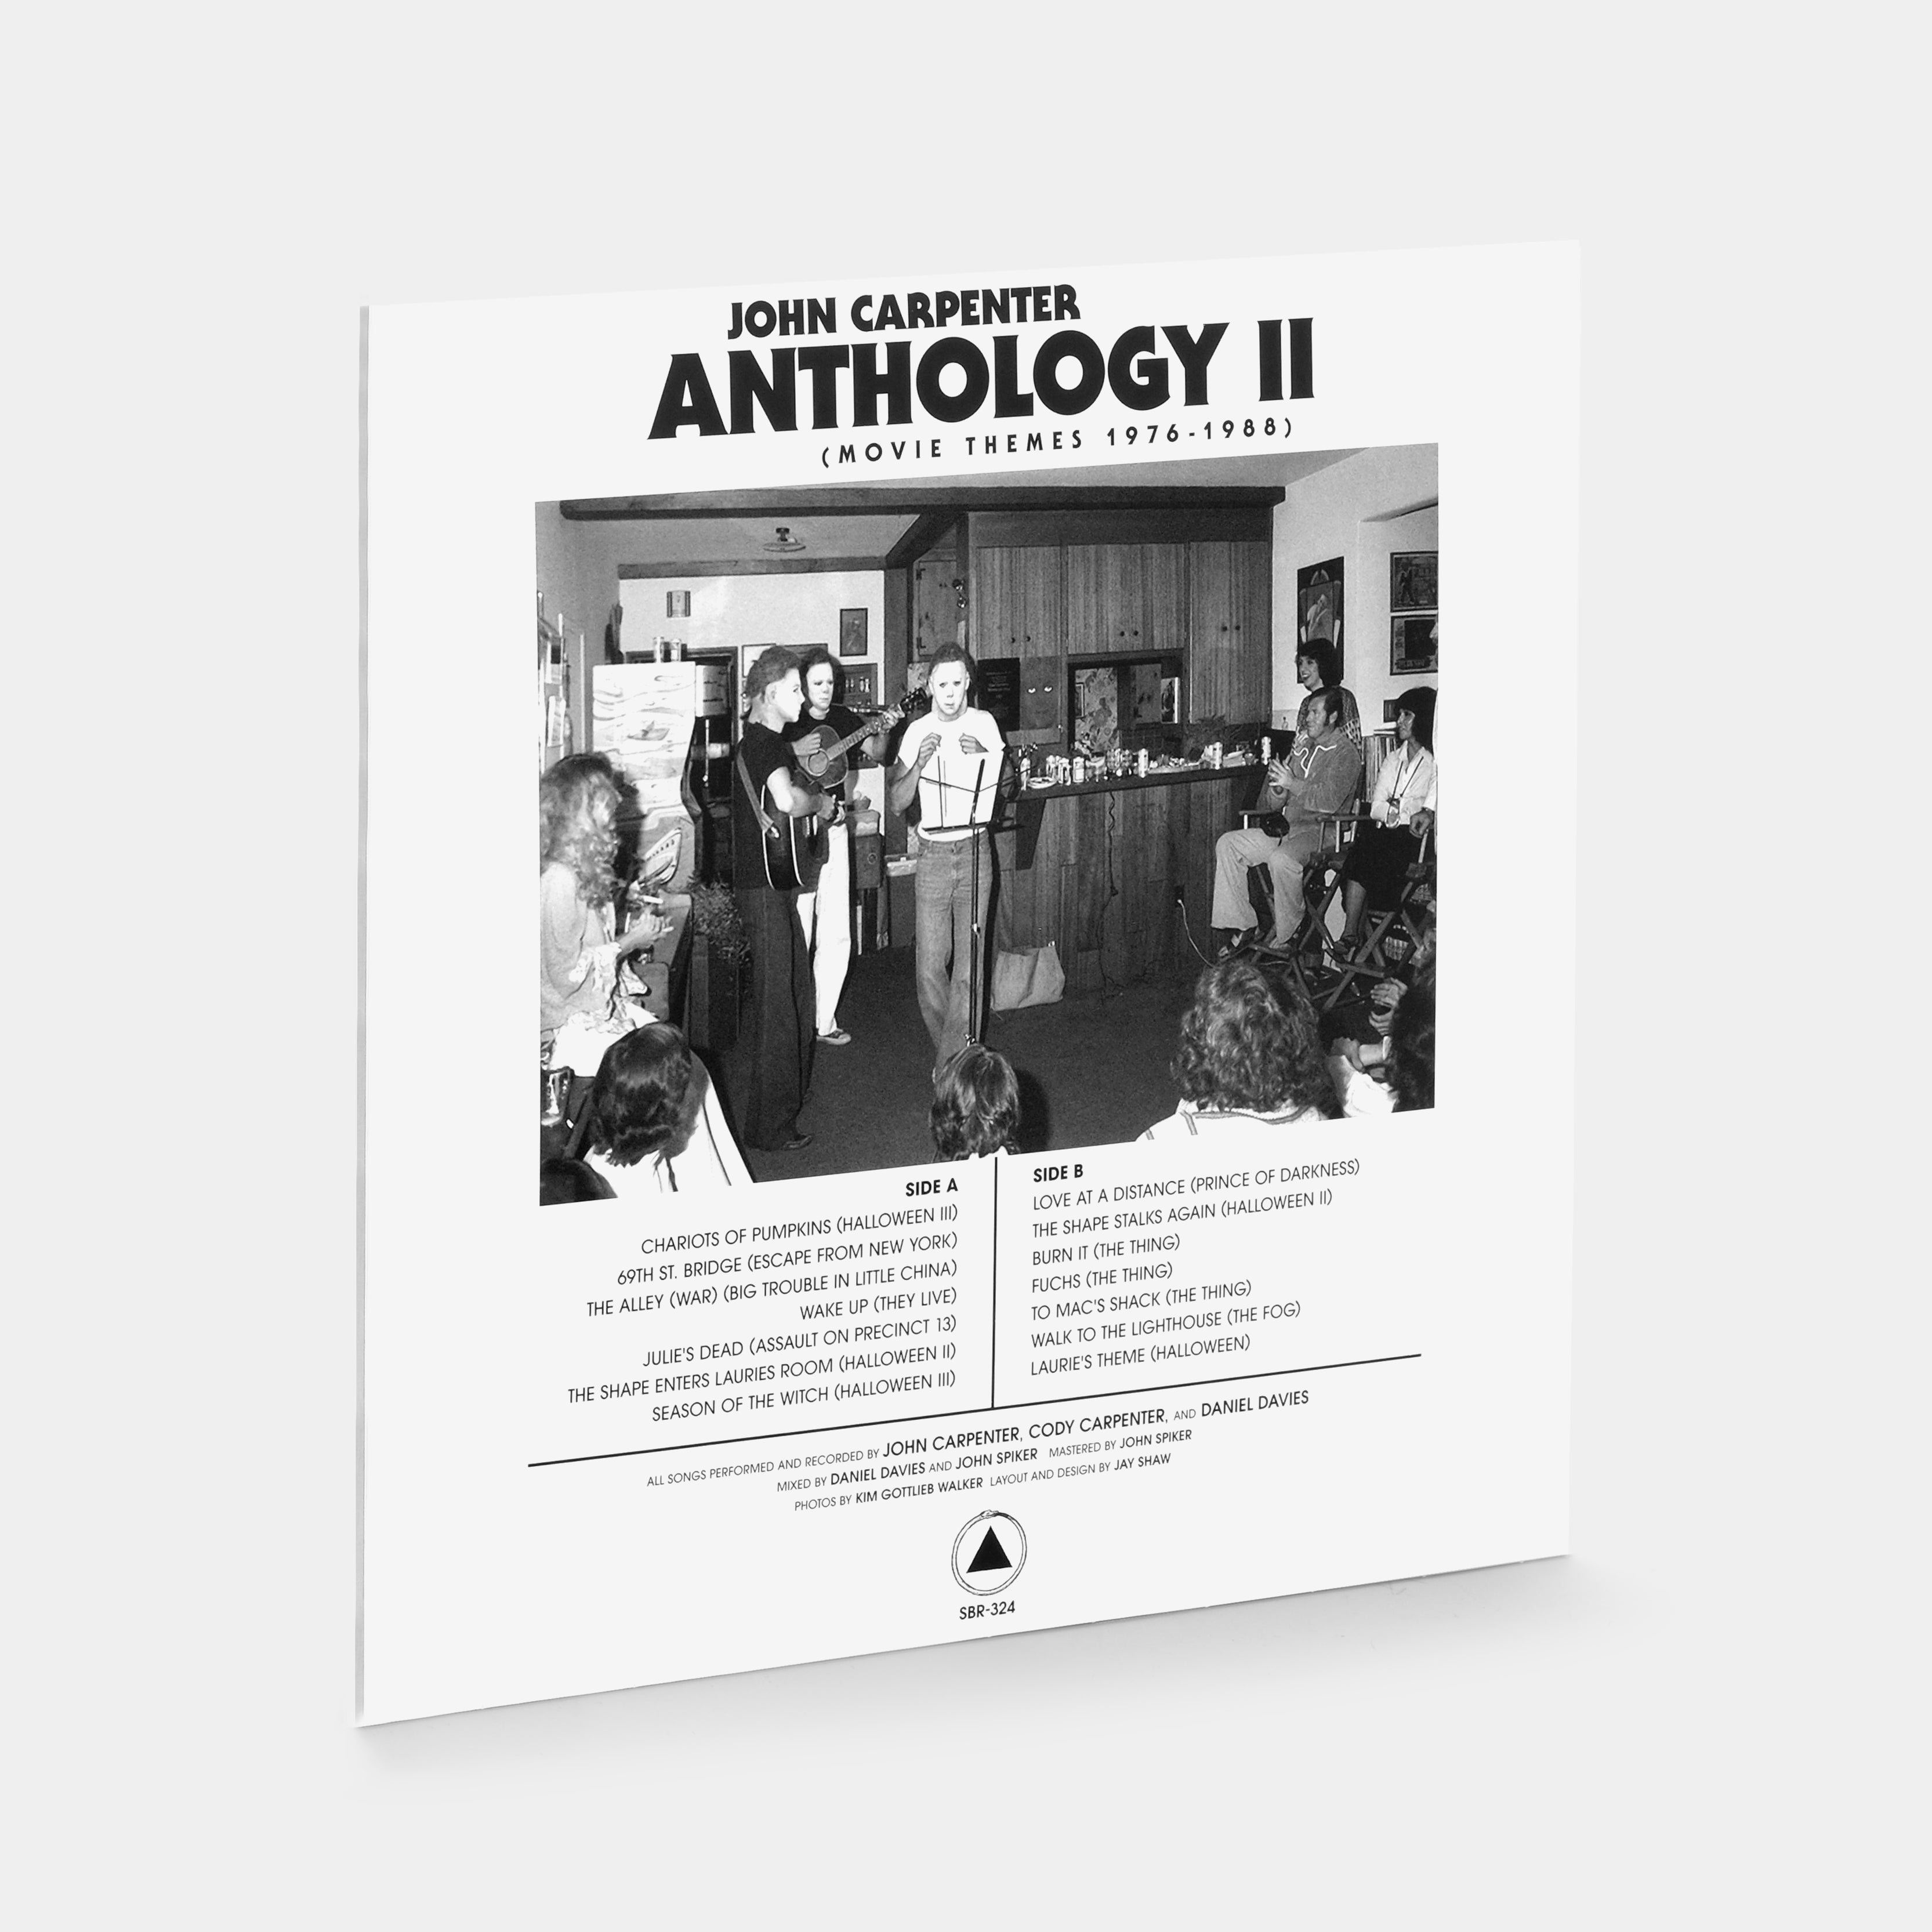 John Carpenter - Anthology II (Movie Themes 1976-1988) LP Blue [The Thing] Vinyl Record